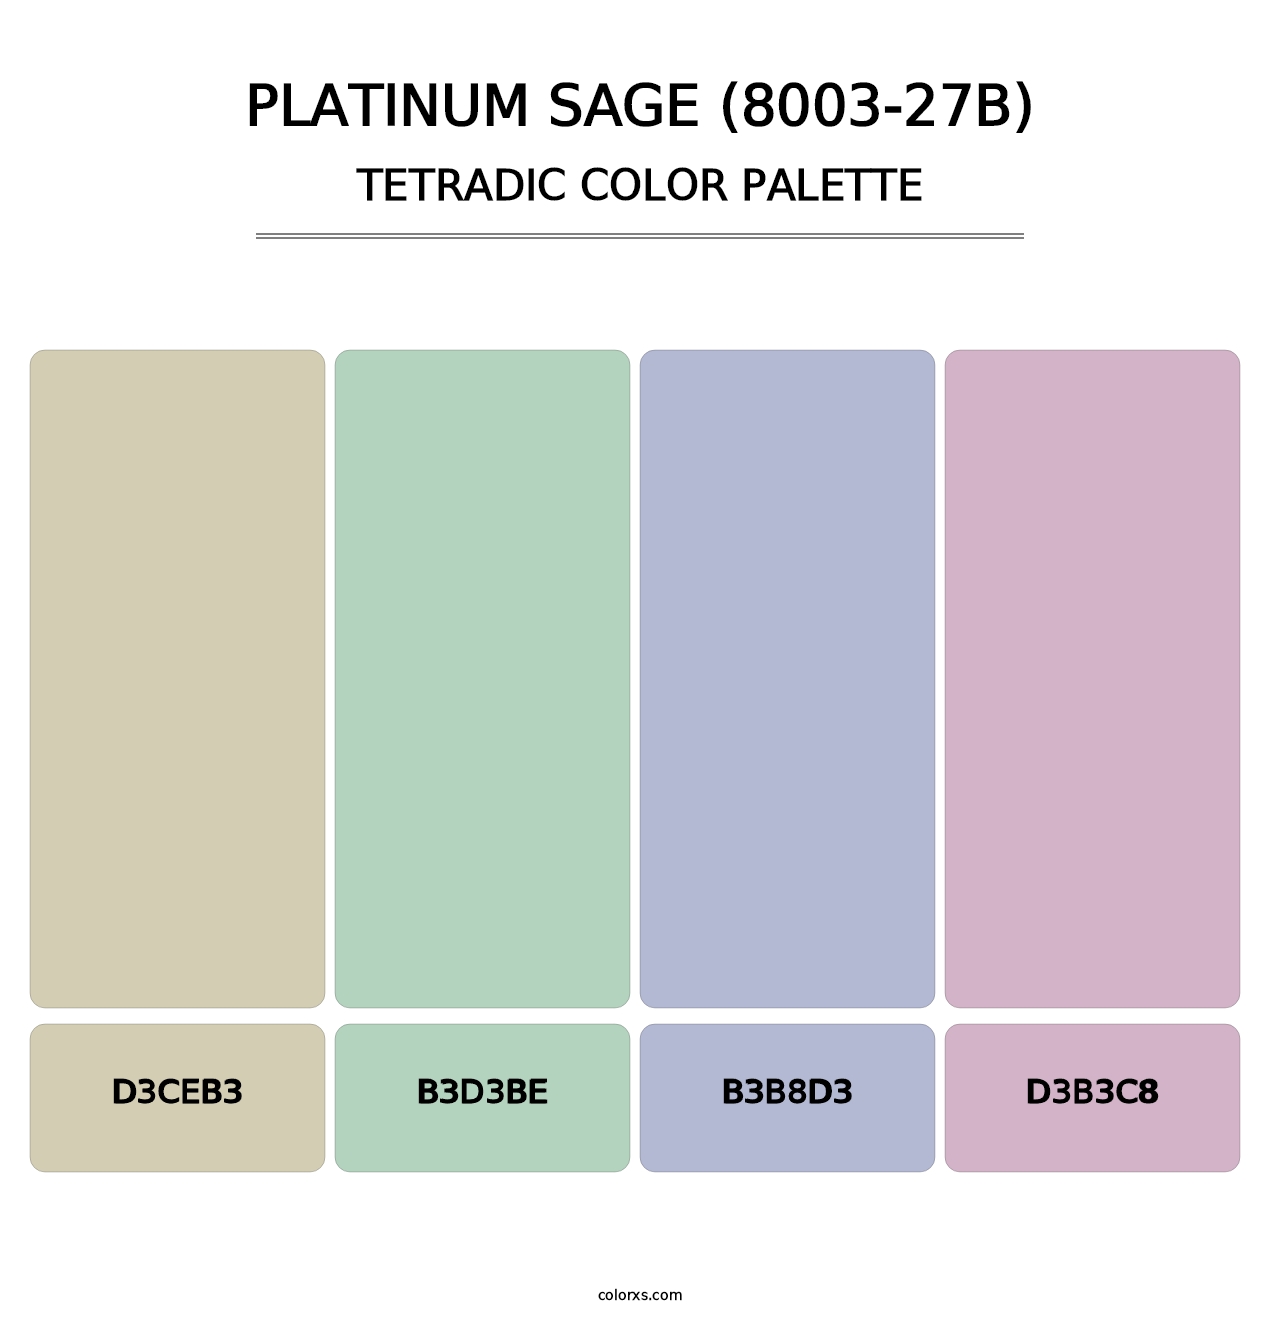 Platinum Sage (8003-27B) - Tetradic Color Palette